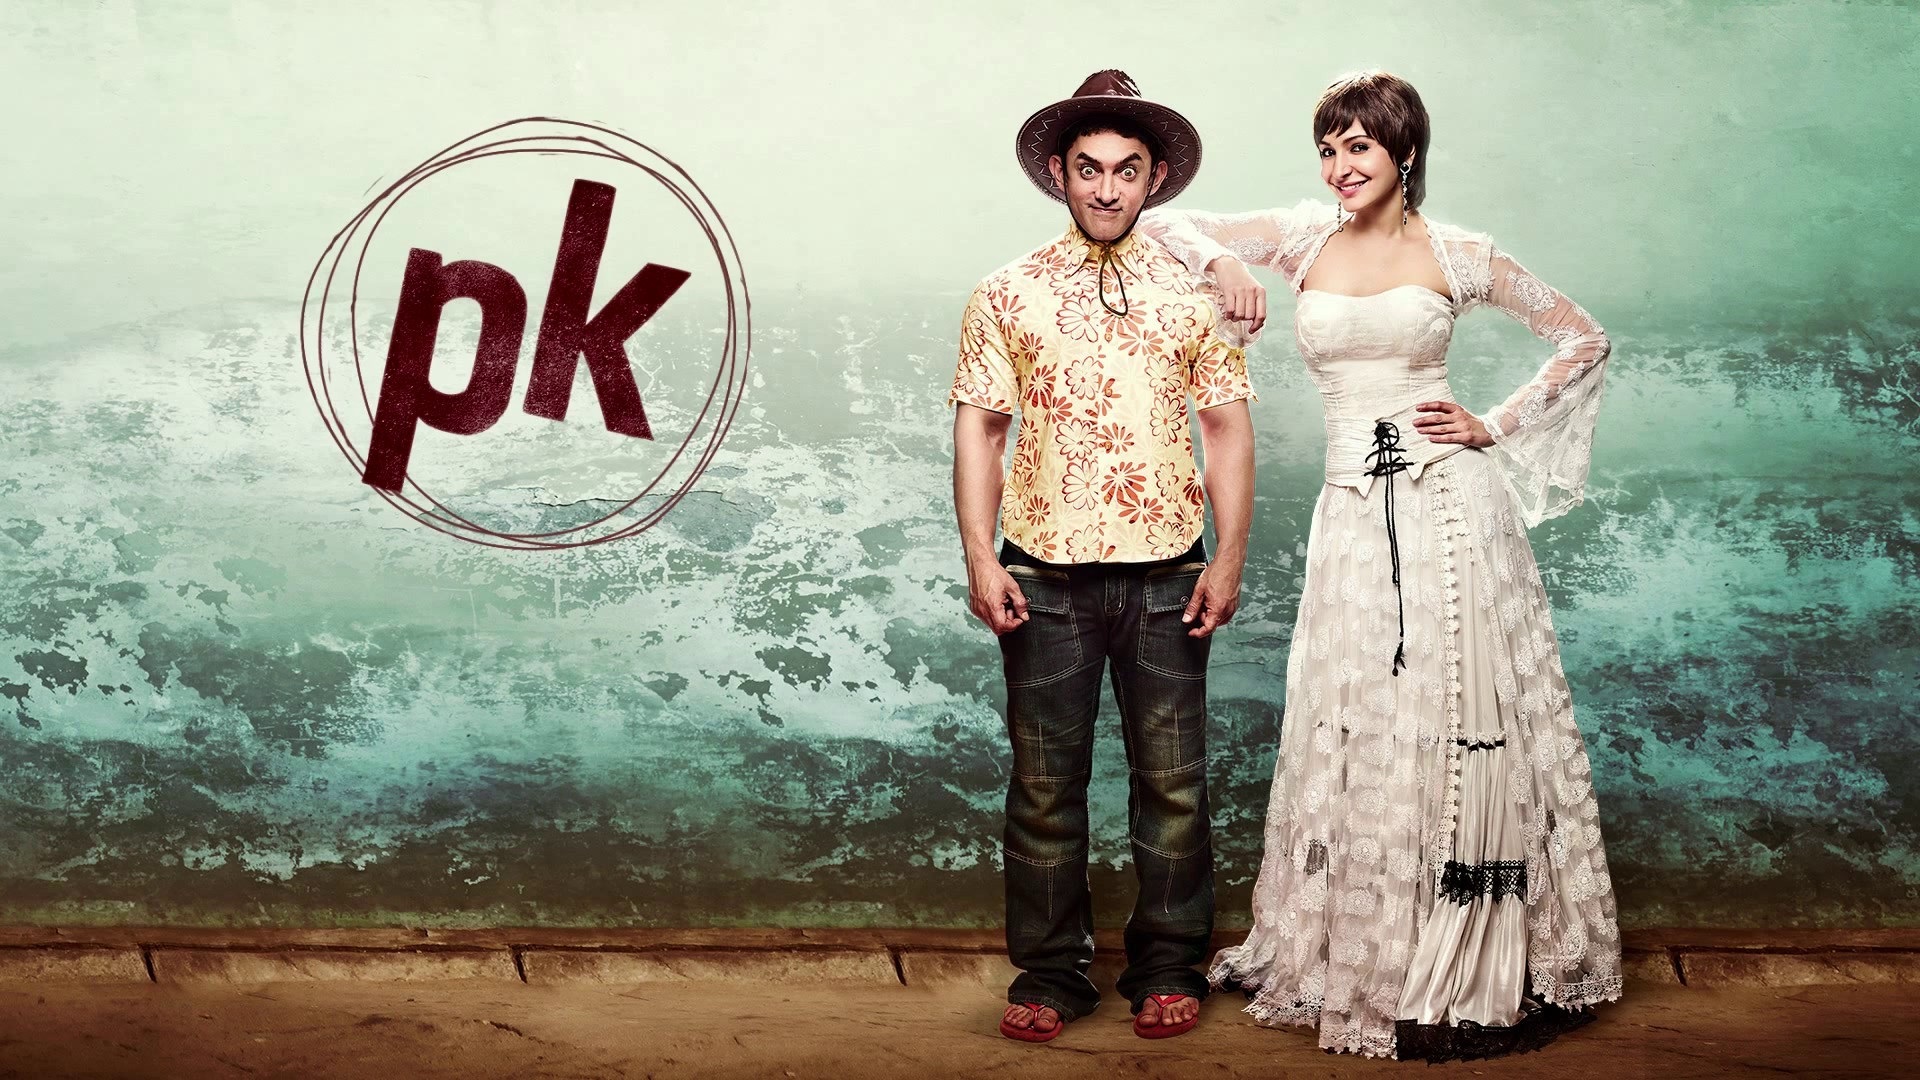 Pk, 3 Idiots, Bollywood Box-office Hits Tackle The - Pk Movie , HD Wallpaper & Backgrounds